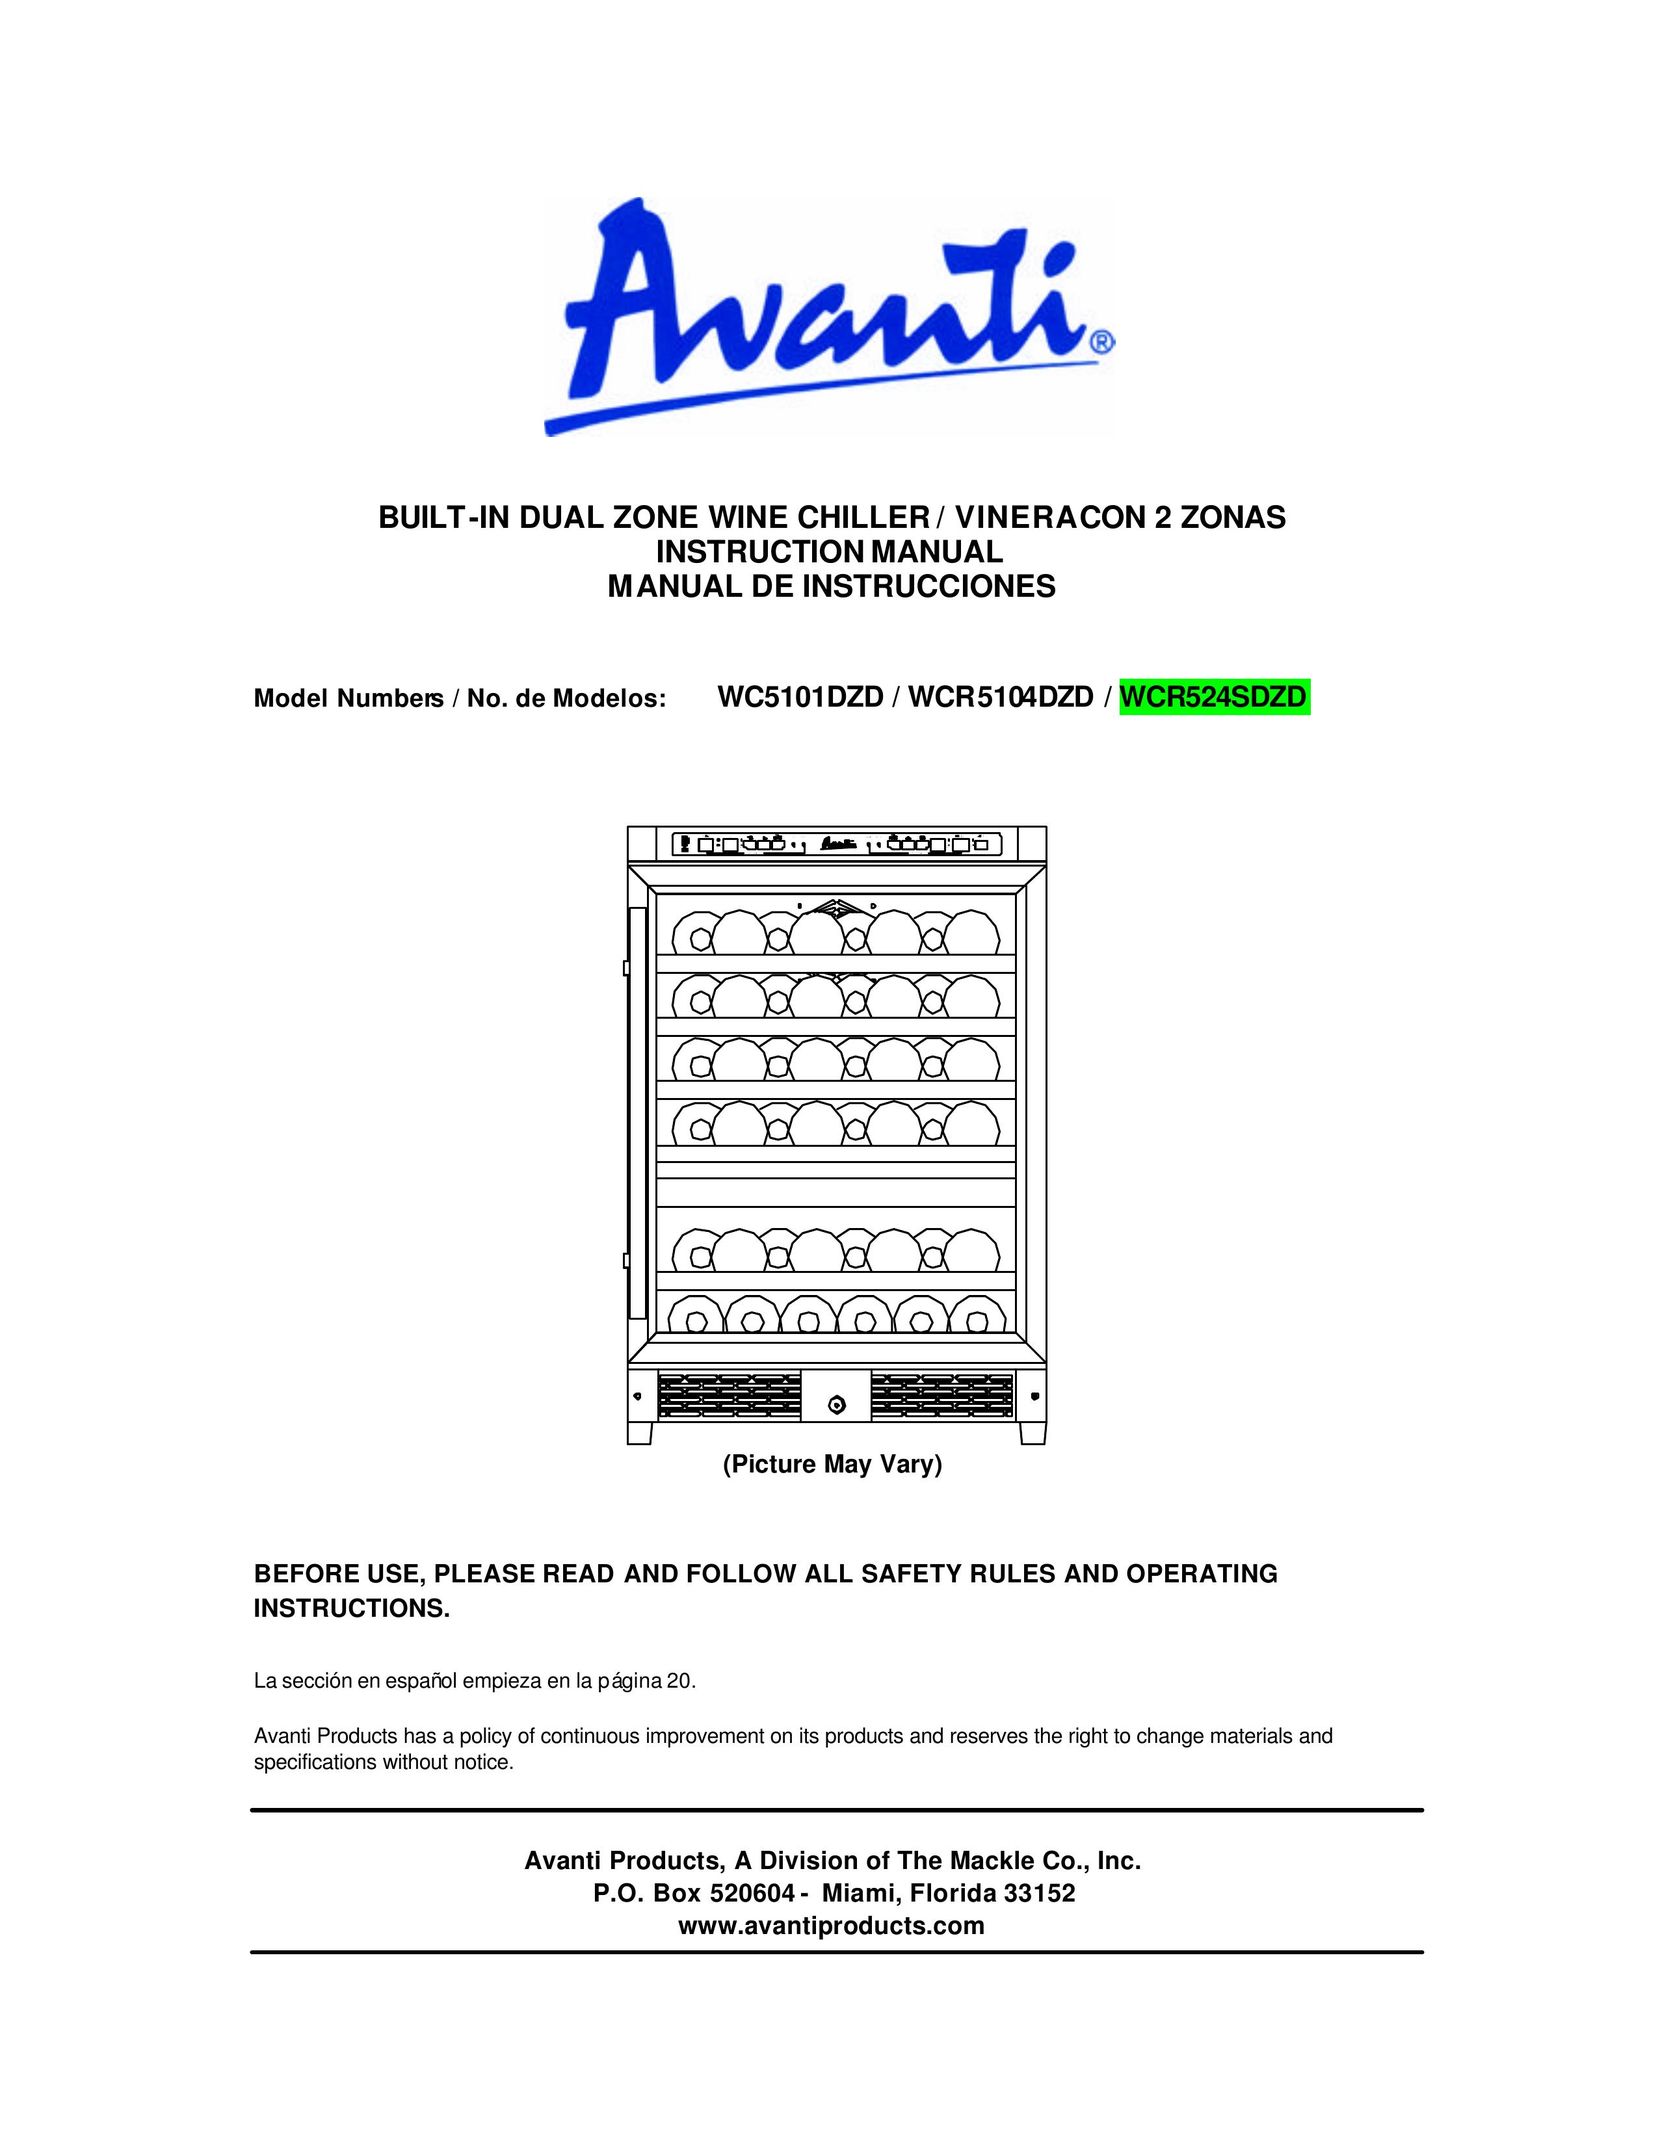 Avanti WCR524SDZD, WCR5104DZD, WC5101DZD Beverage Dispenser User Manual